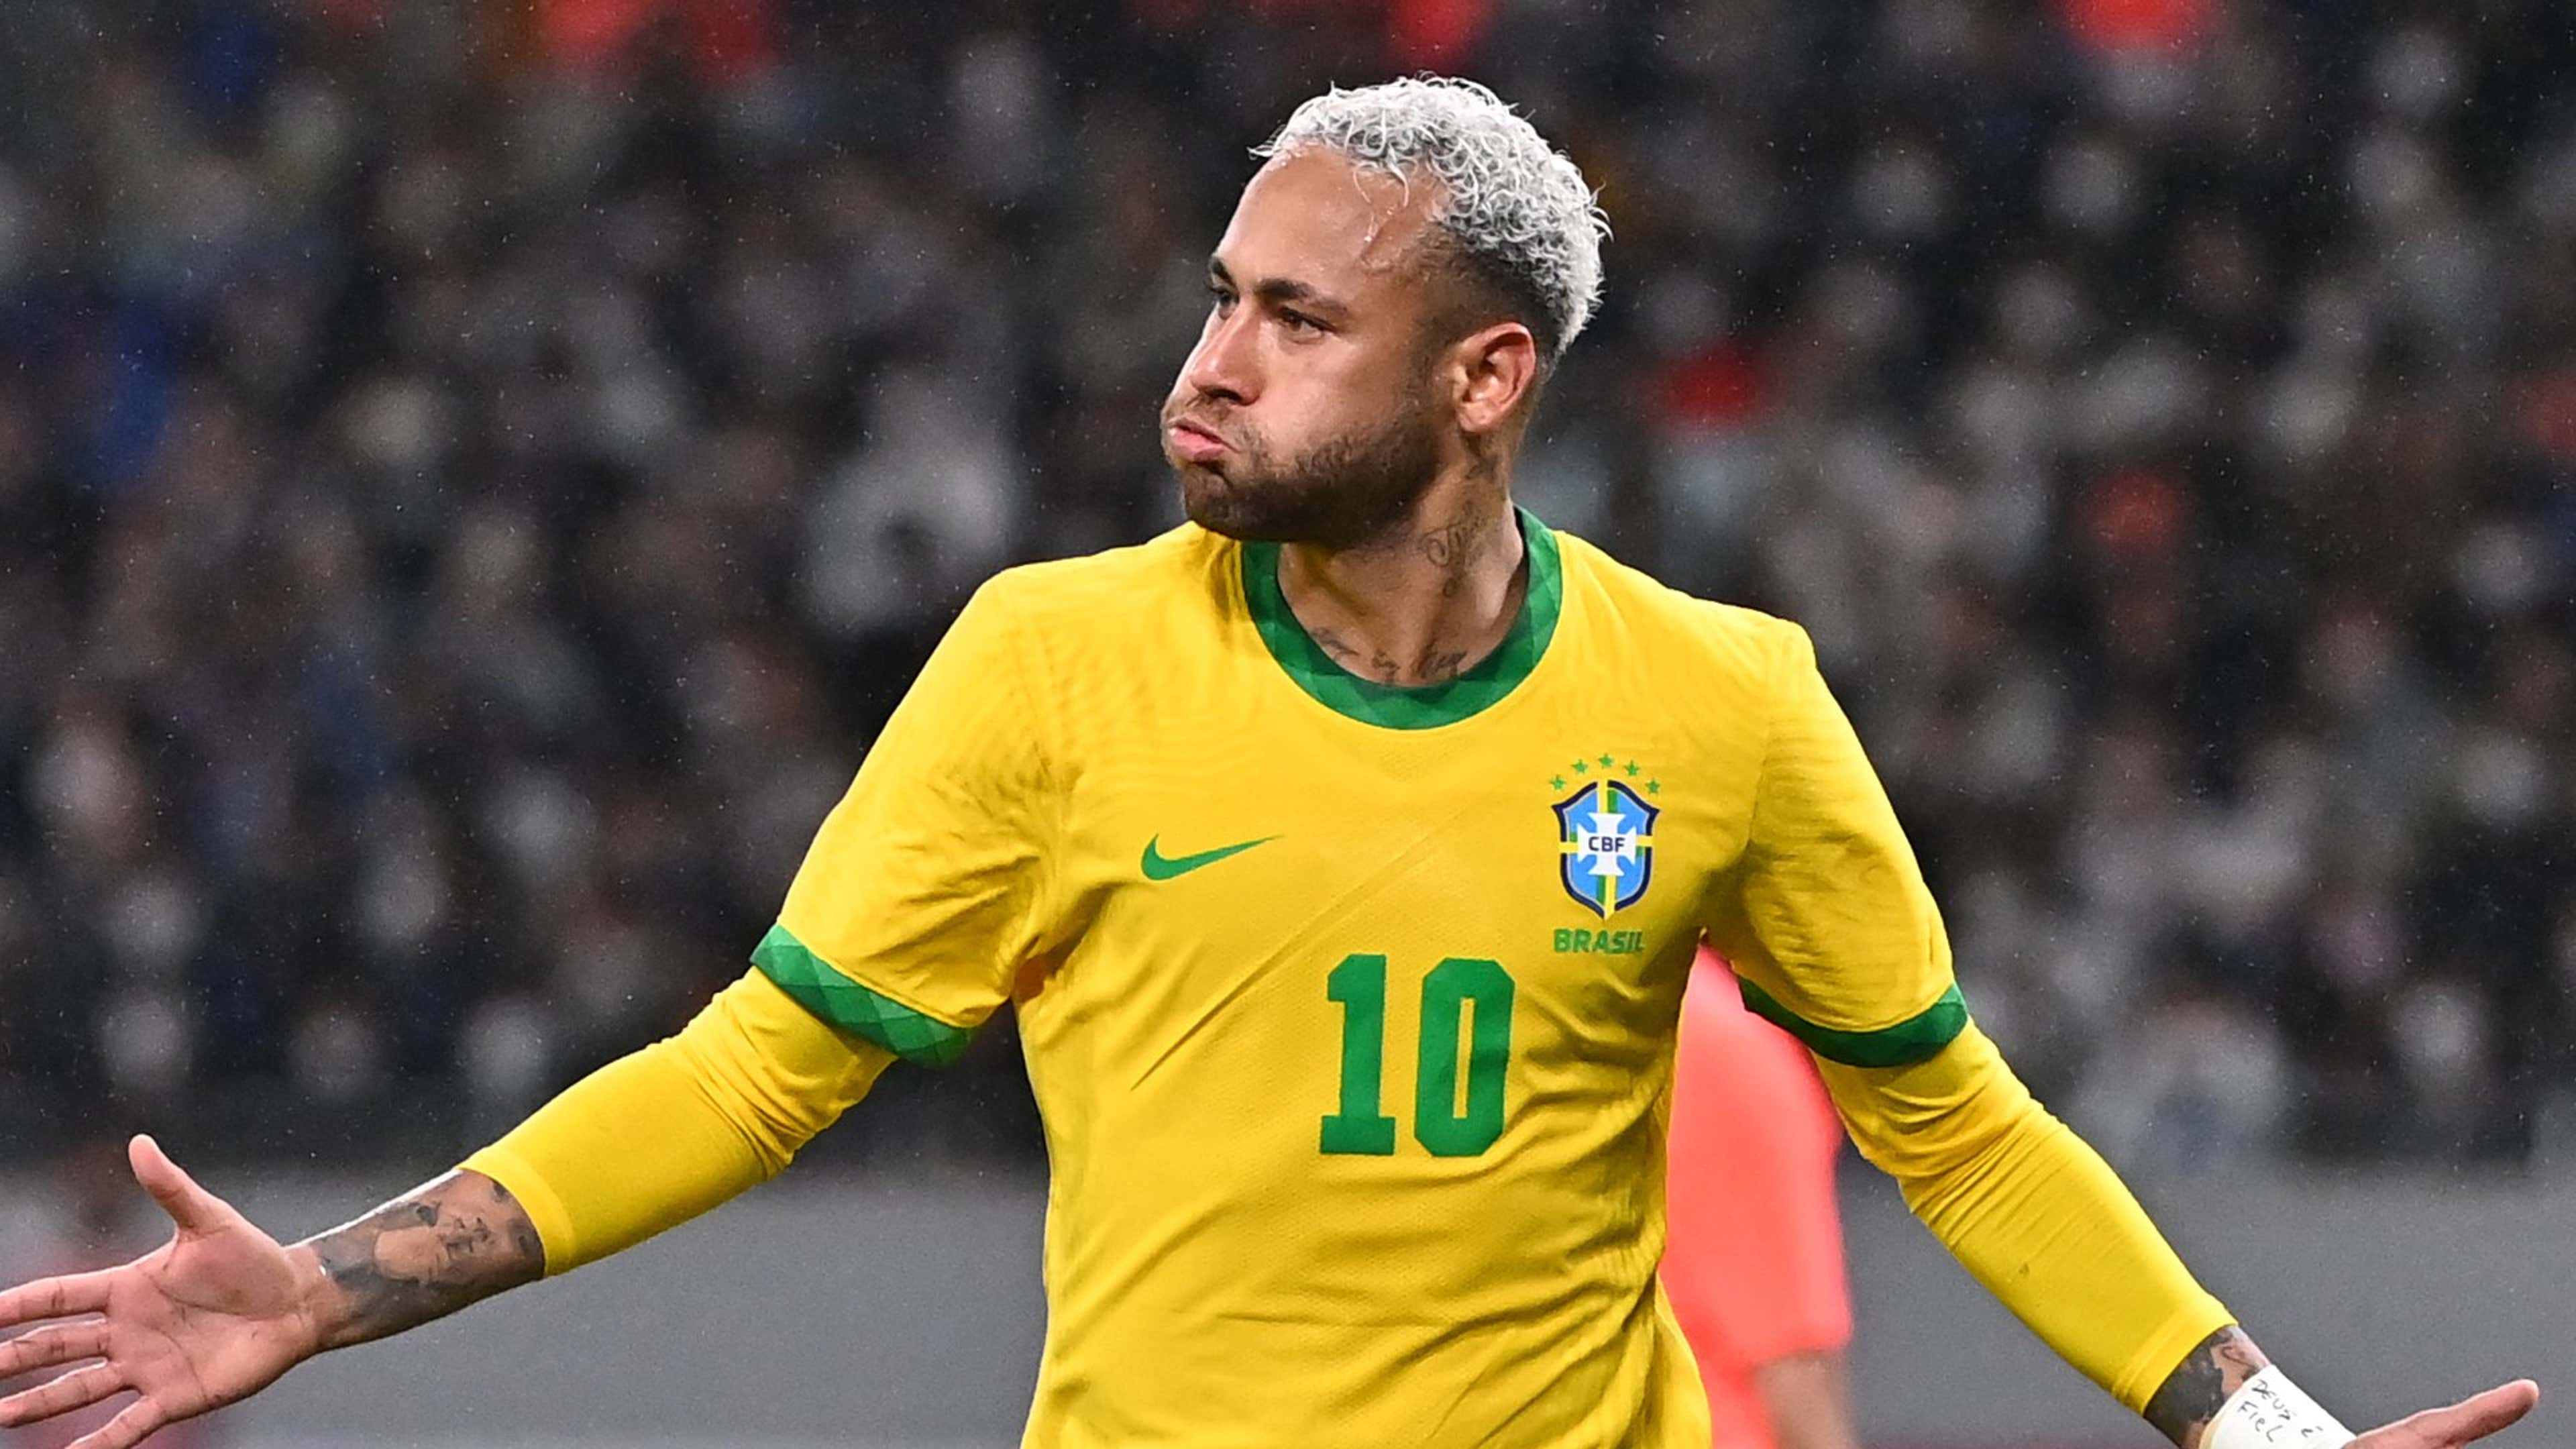 Neymar, Kaka Headline Brazil Team That Will Face Costa Rica at Red